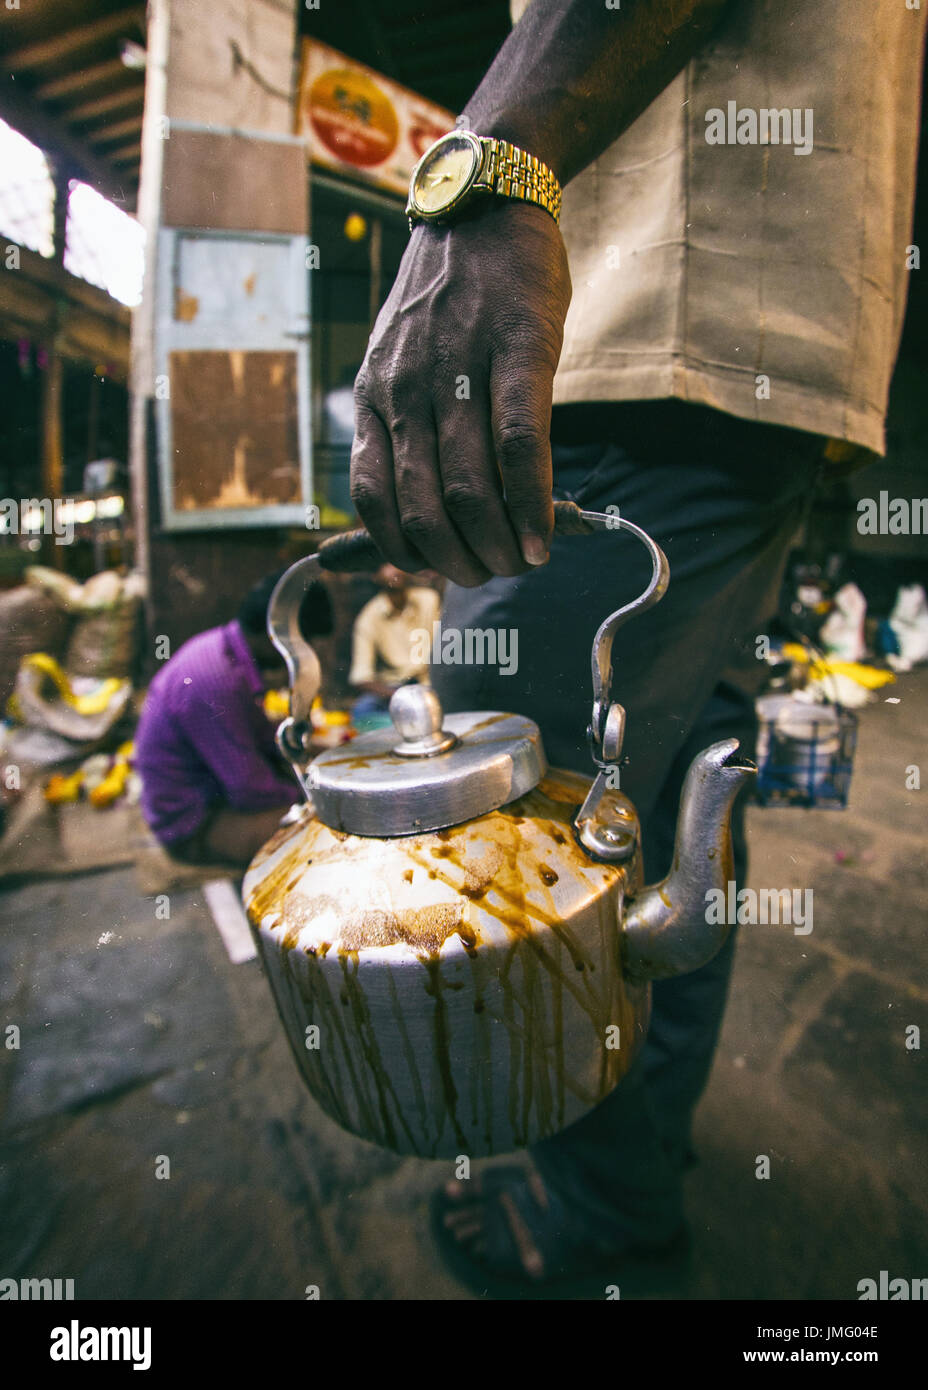 Chaiwala/Tea maker Stock Photo